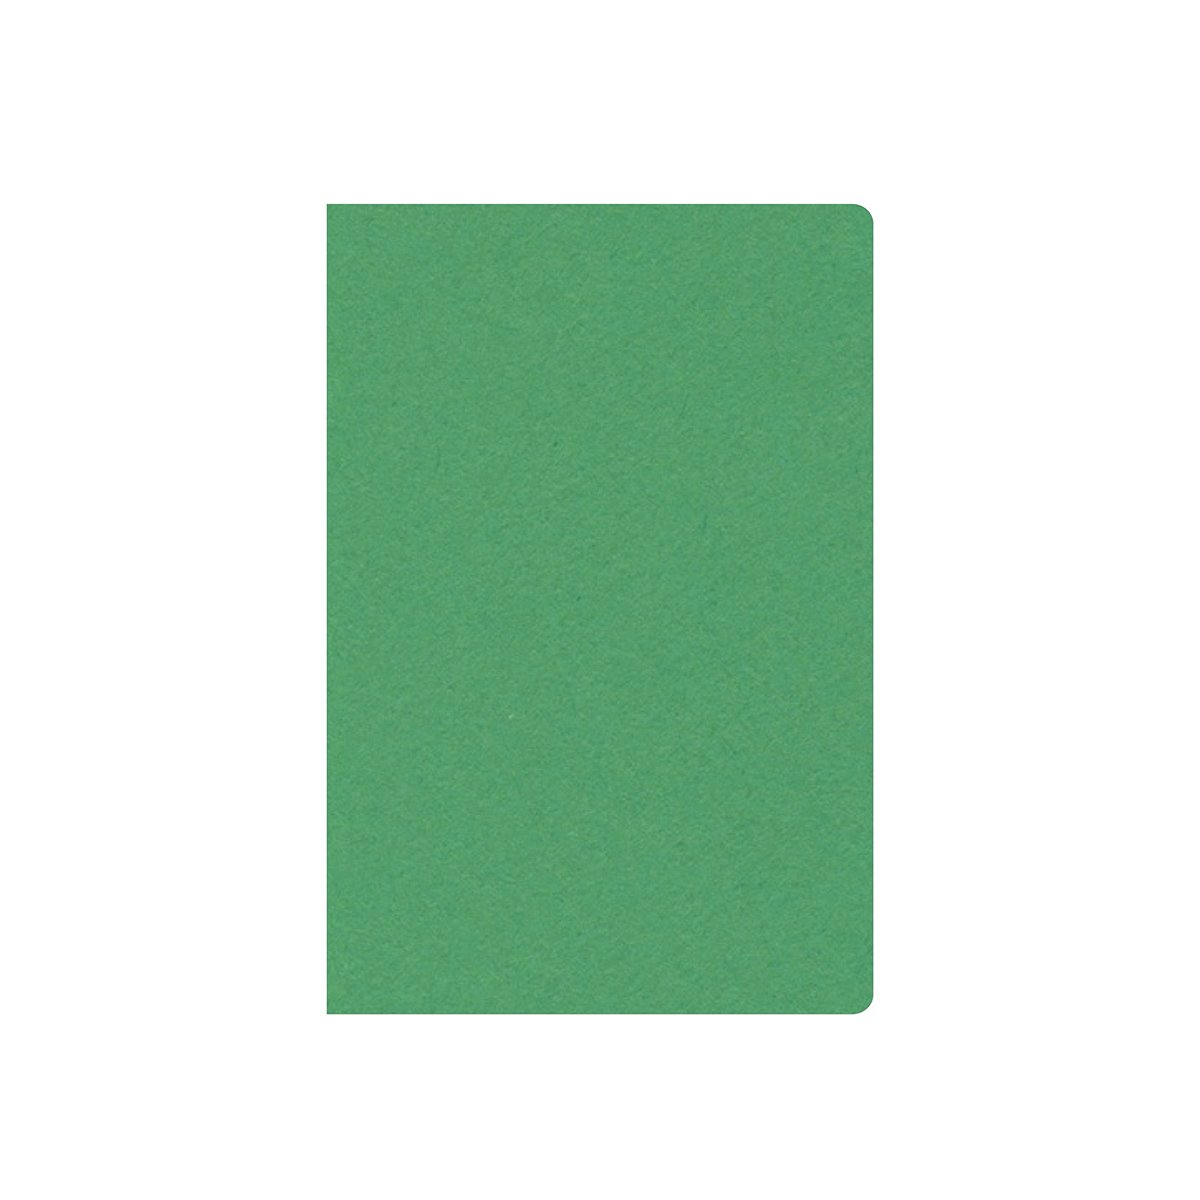 Utilitario Mexicano, Luis Barragán Color Notebook, assorted colors, Green- Placewares